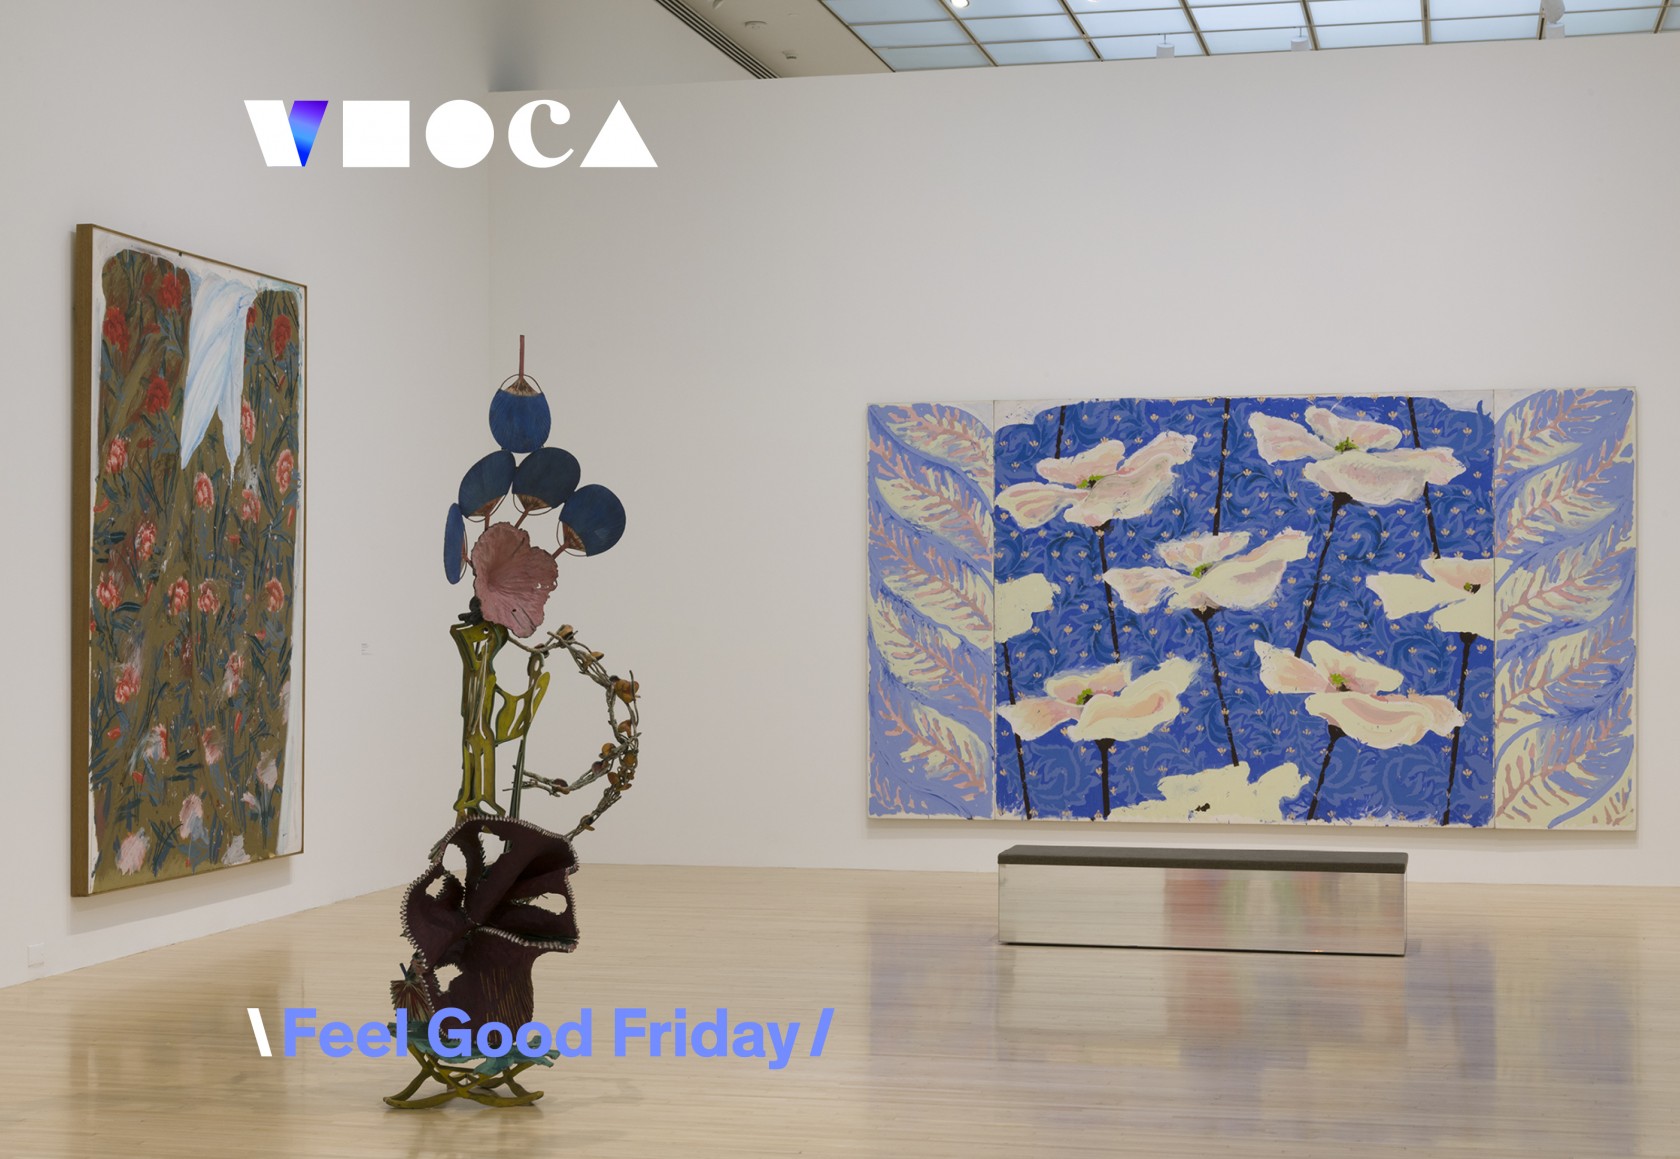 Virtual MOCA: Feel Good Friday